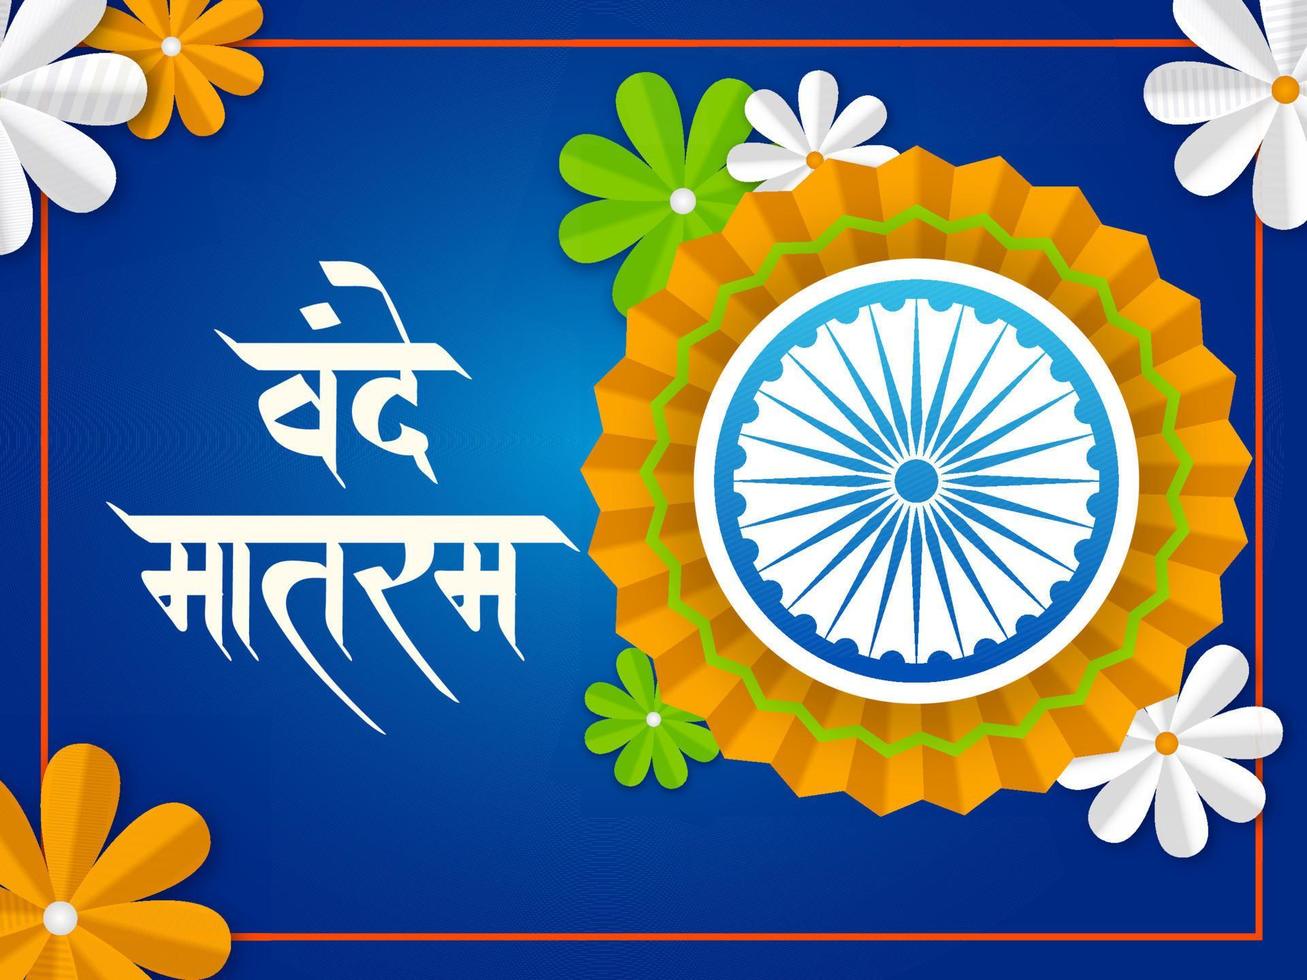 hindi texto Vande mataram con India bandera papel Insignia y flores decorado en azul antecedentes. vector